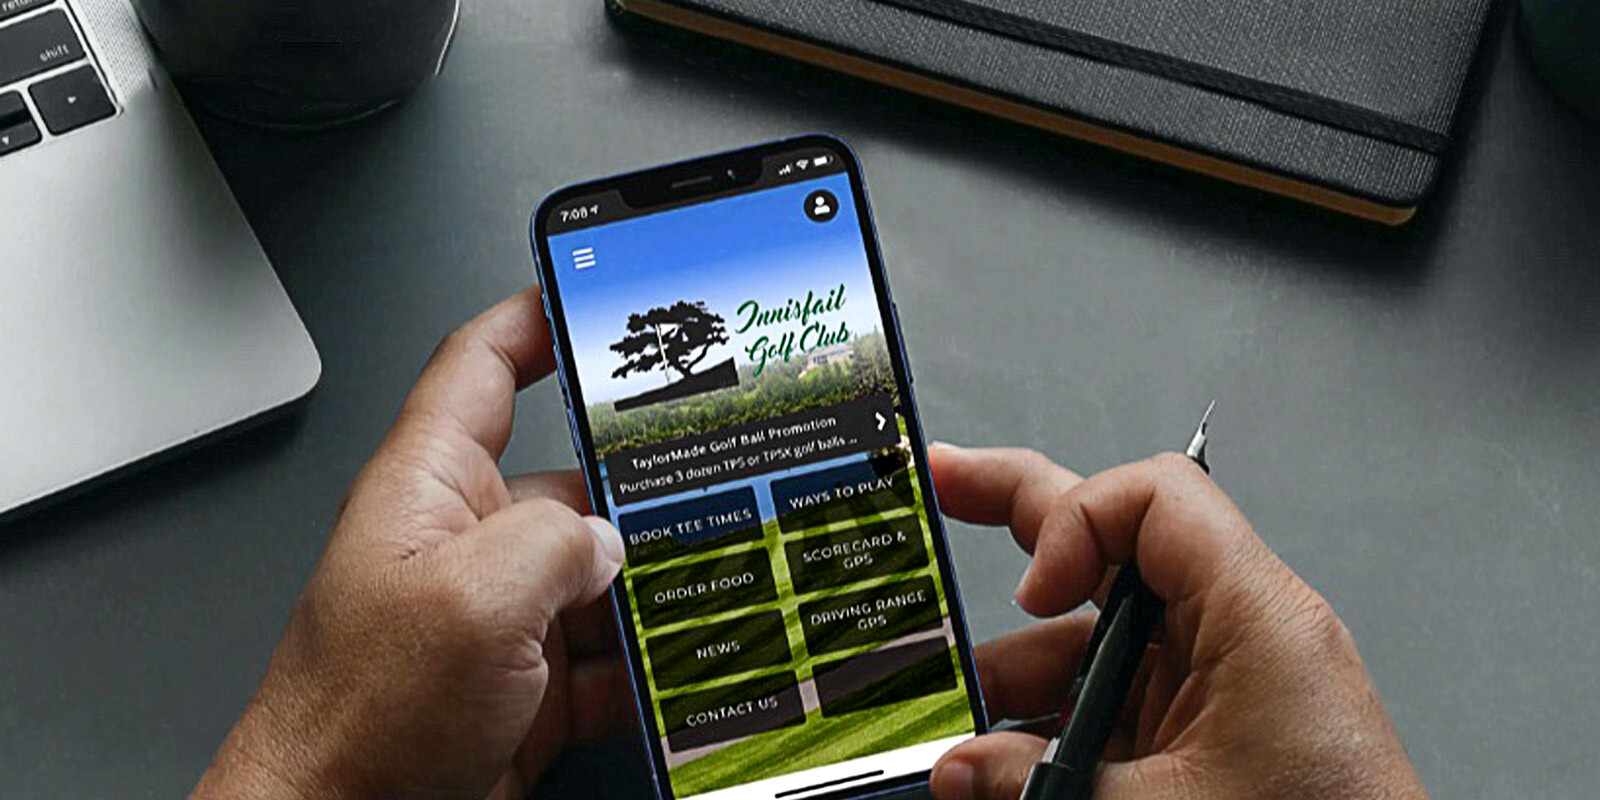 Innisfail Golf Club - IGC App Advertising - Corporate Advertising - IGC